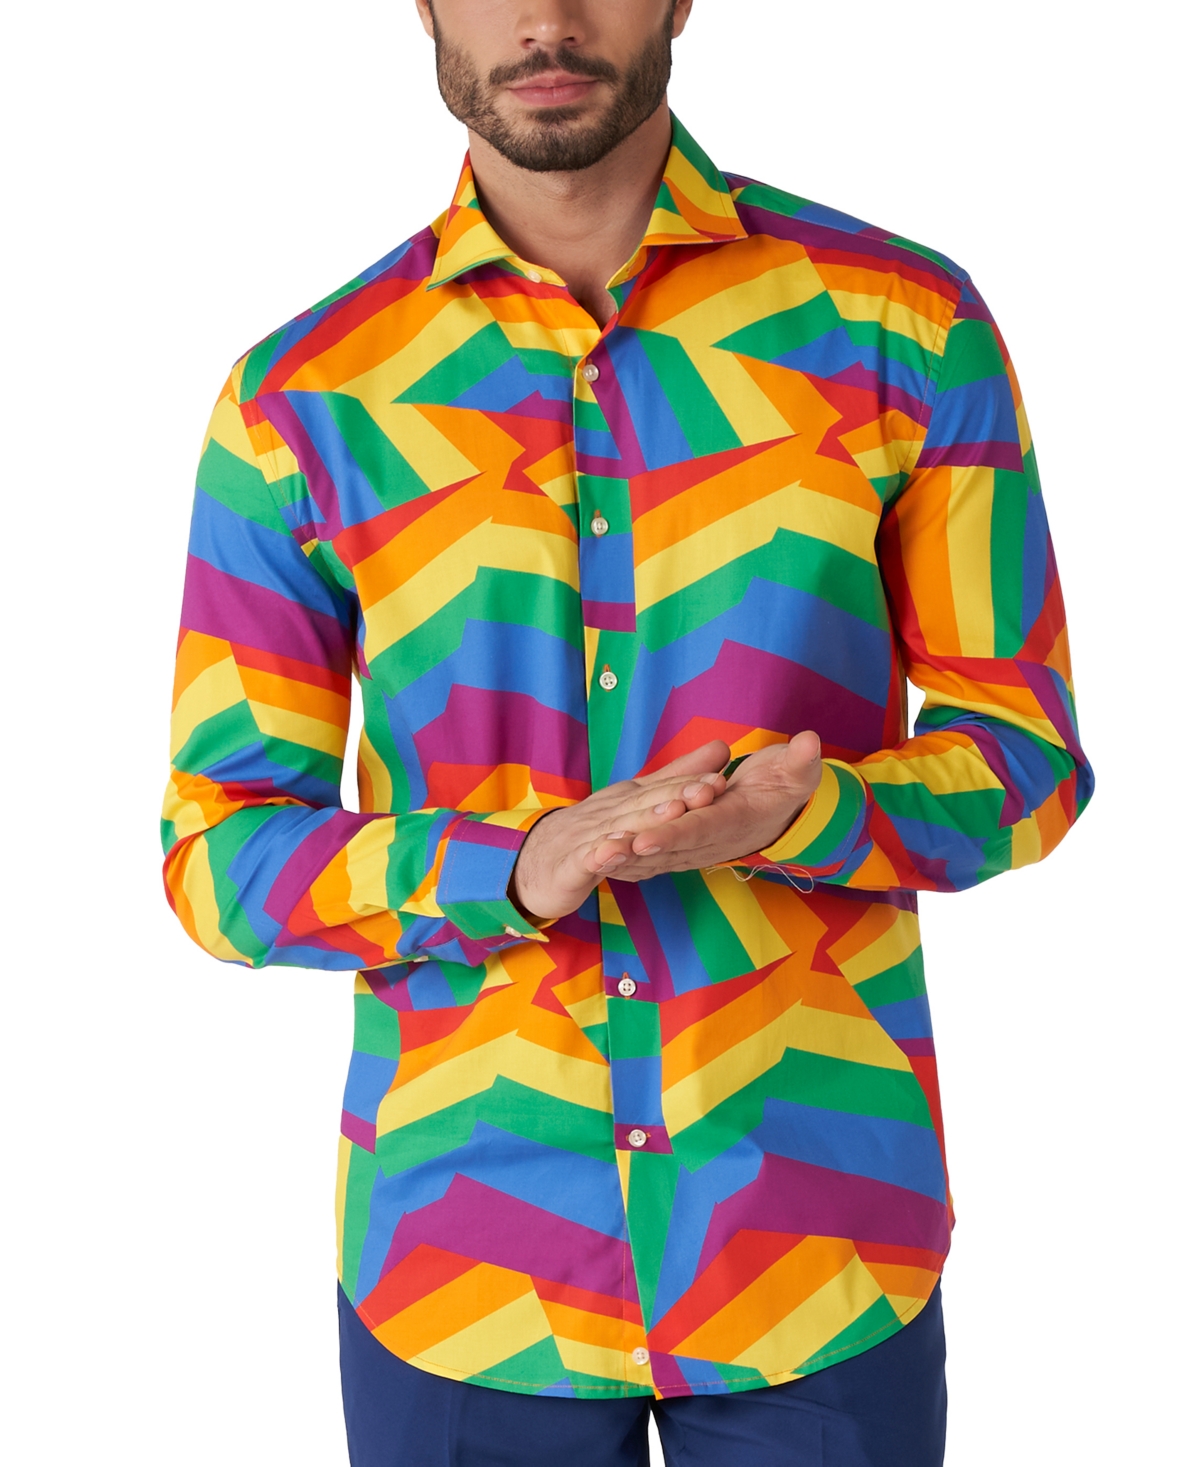 Men's Long-Sleeve Zig-Zag Rainbow Shirt - Miscellane